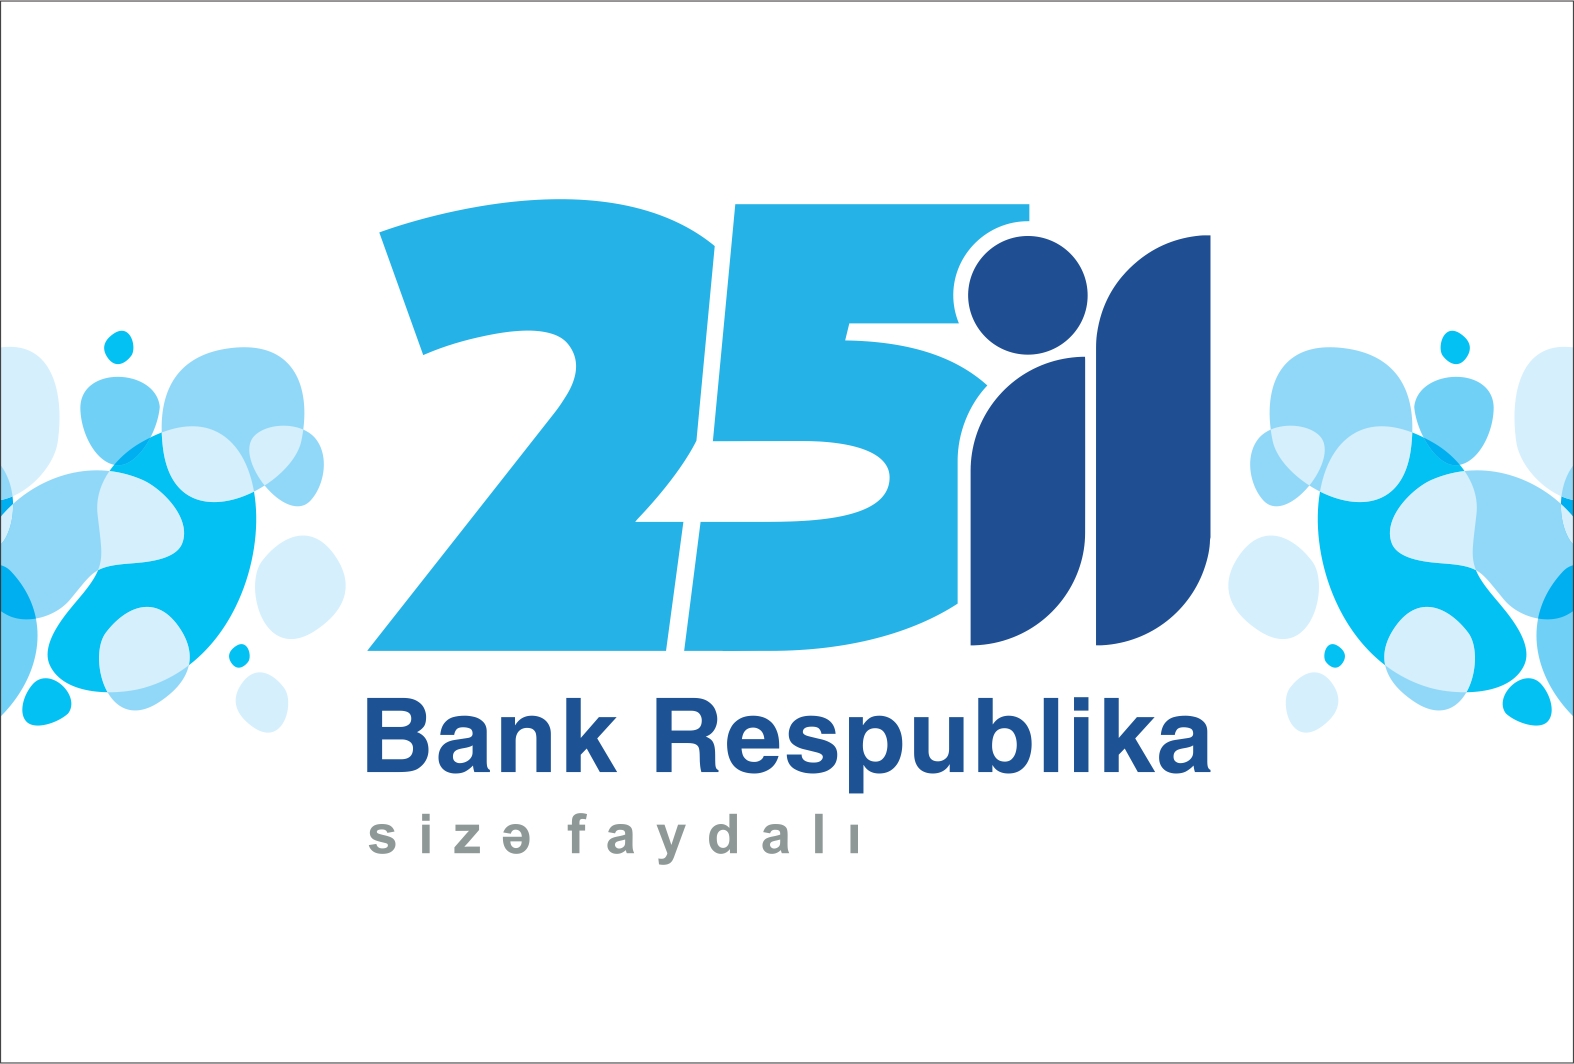 Respublika. Bank Respublika. Bank Respublika logo. Bank Respublika 30. Азербайджан банк Республика.